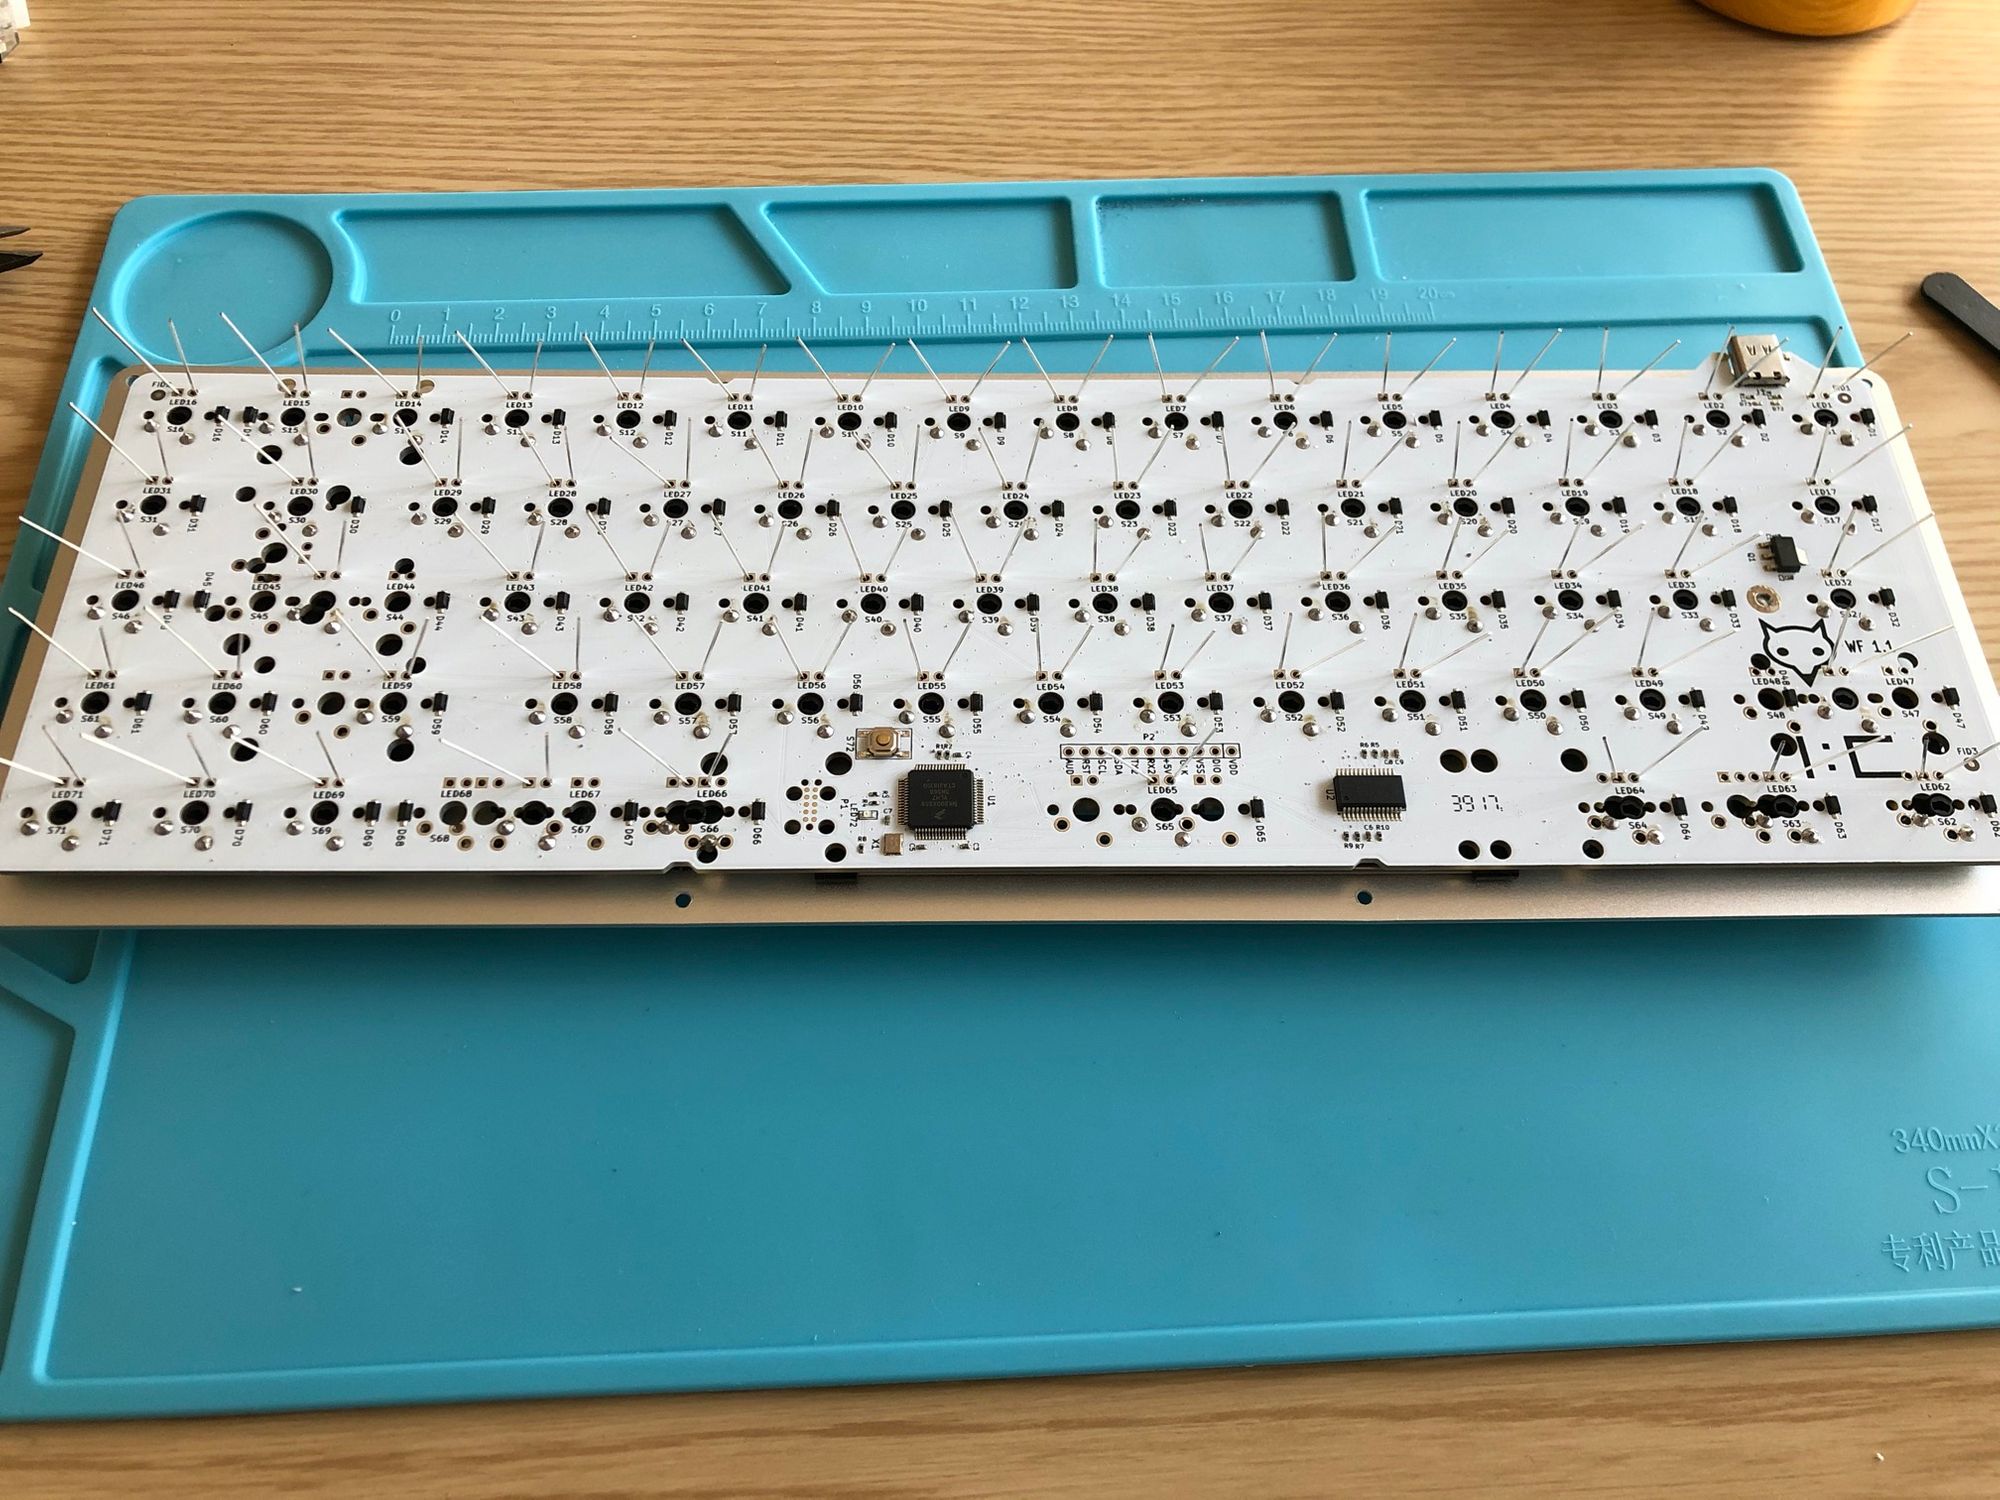 Gallery: building my own mechanical keyboard